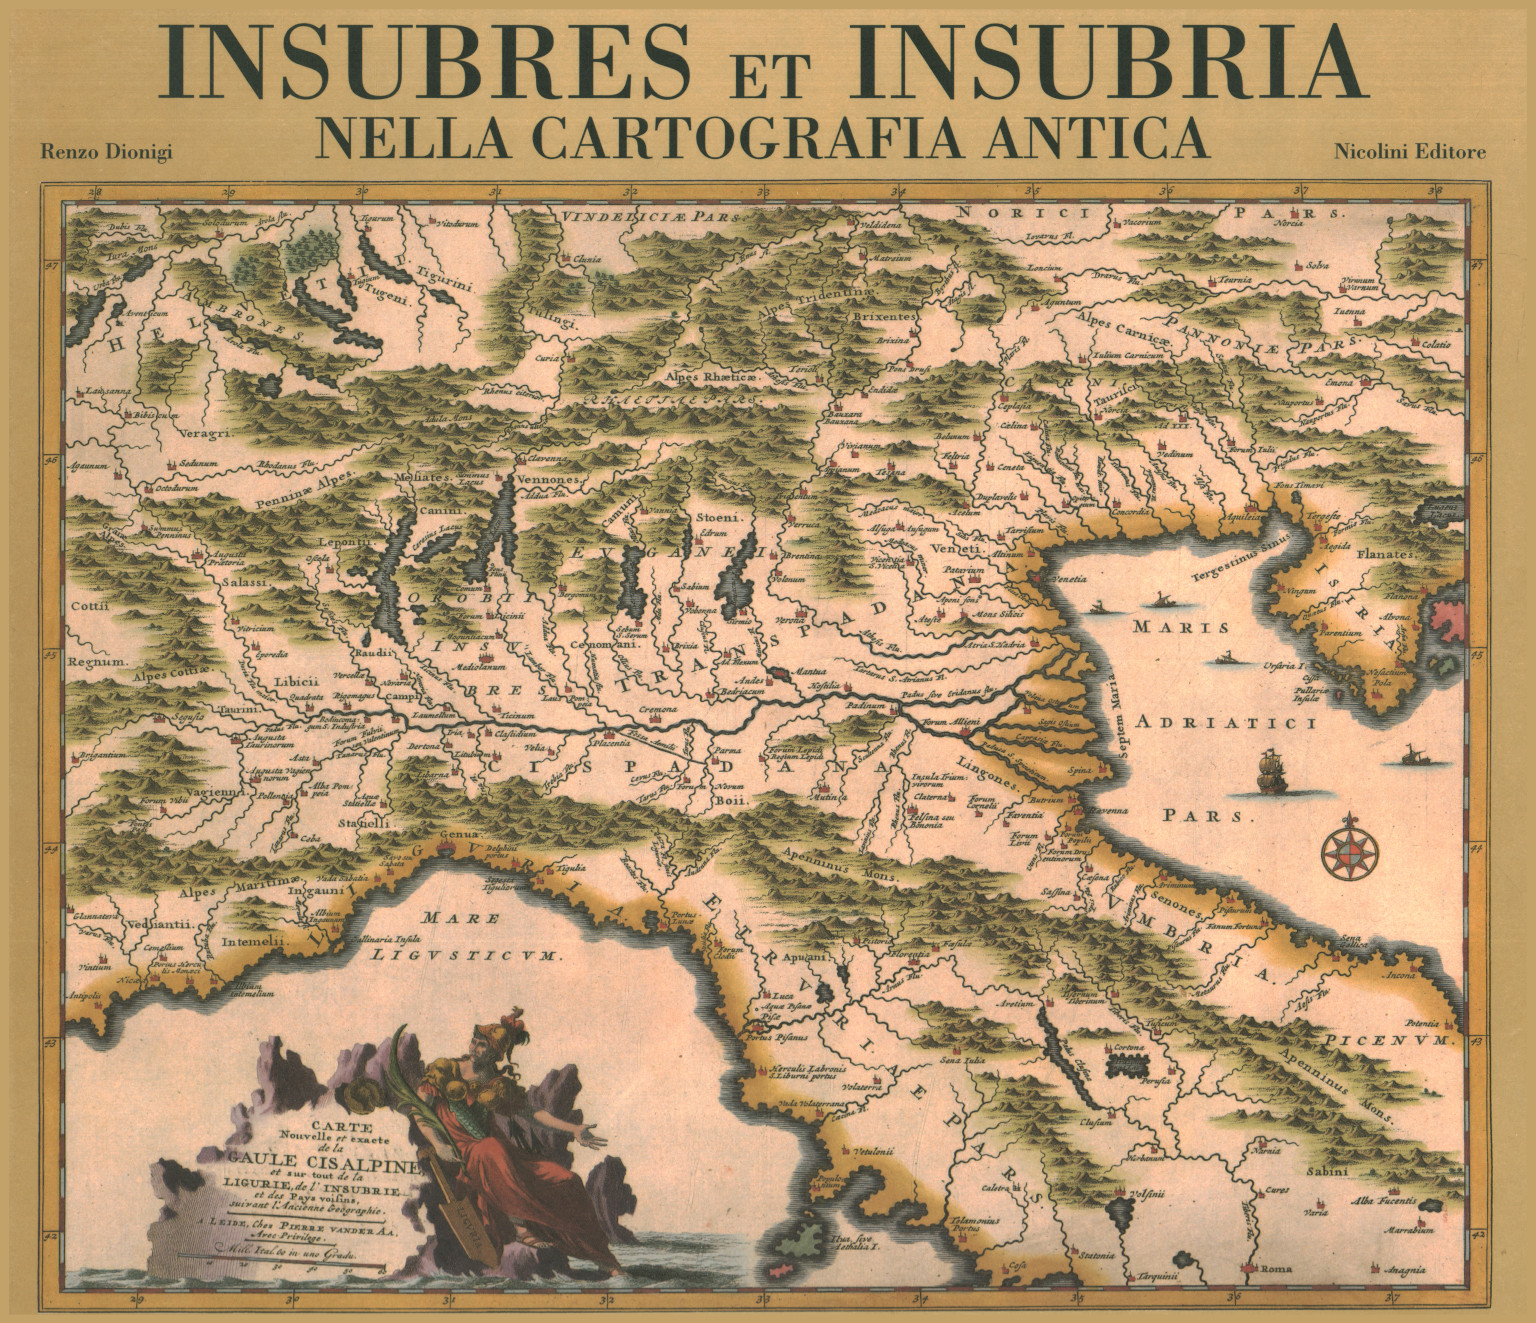 Insubres et Insubria nella cartografia a